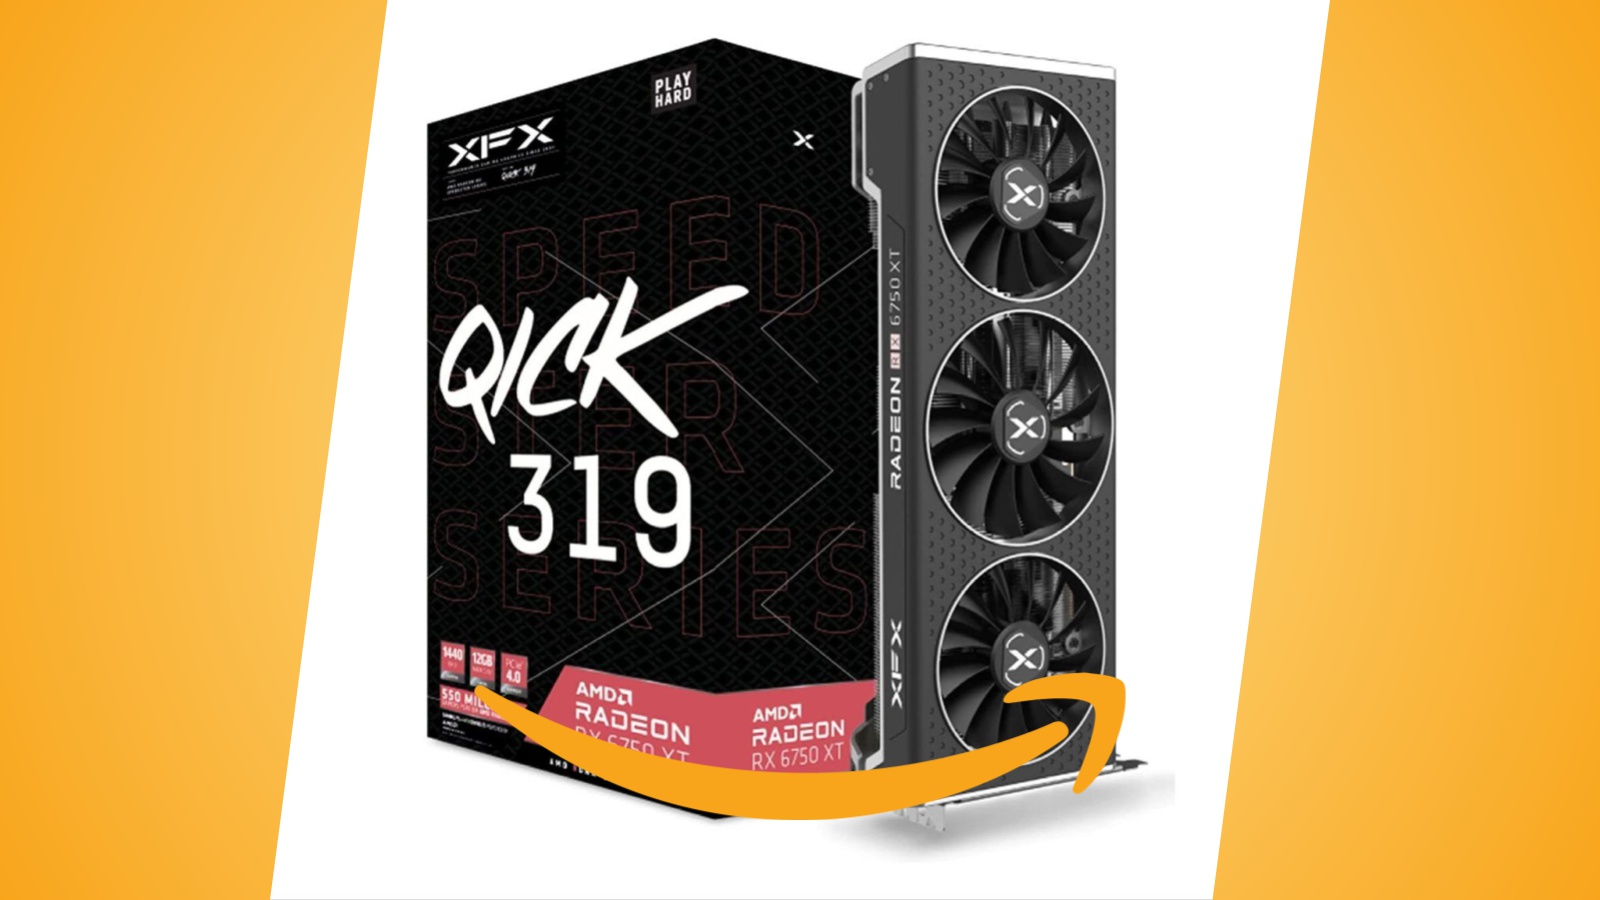 Offerte Amazon: XFX Speedster Quik319 Radeon RX 6750XT Core da 12 GB GDDR6 al prezzo minimo storico